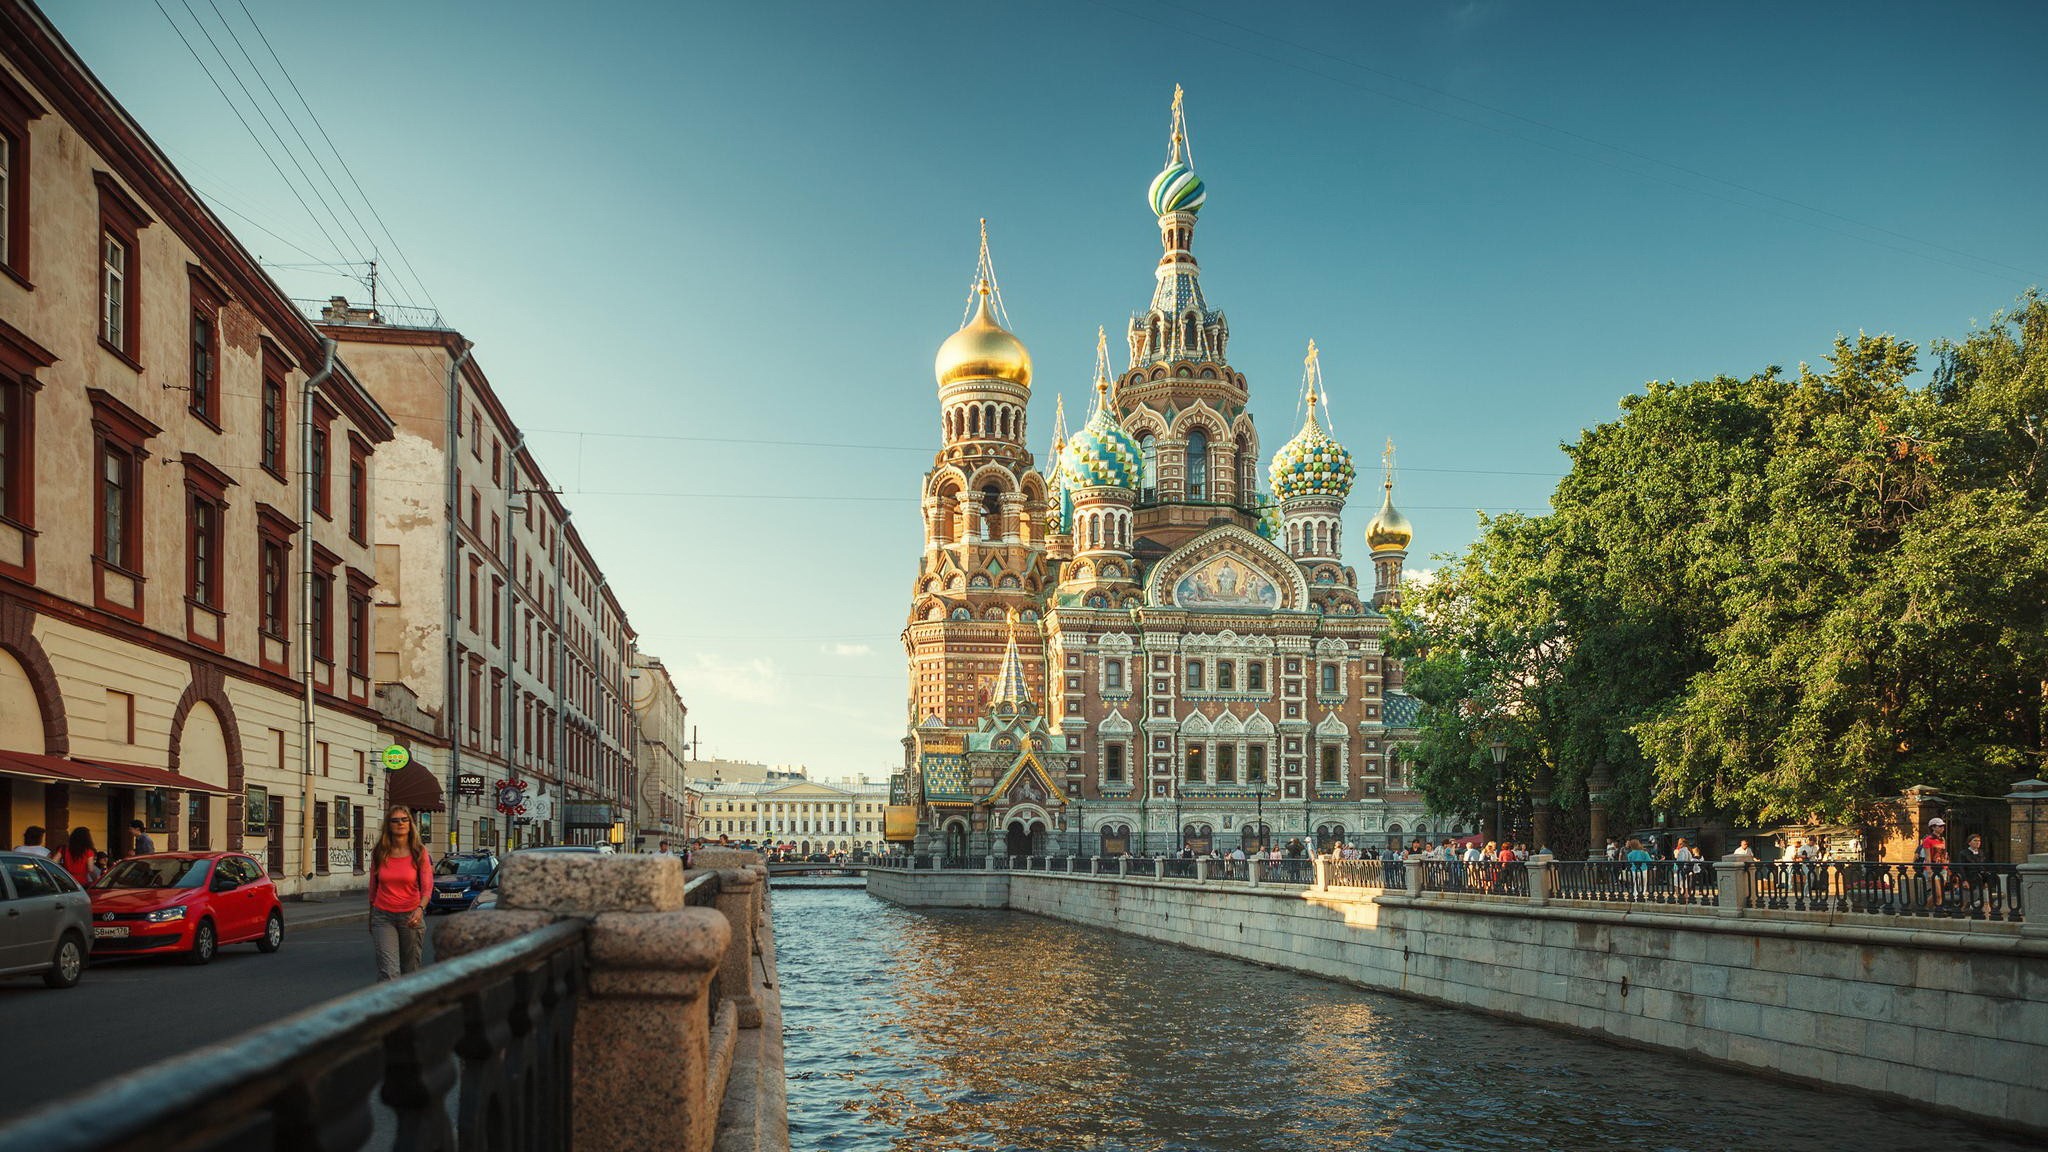 General 2048x1152 city promenades St. Petersburg Russia canal landmark